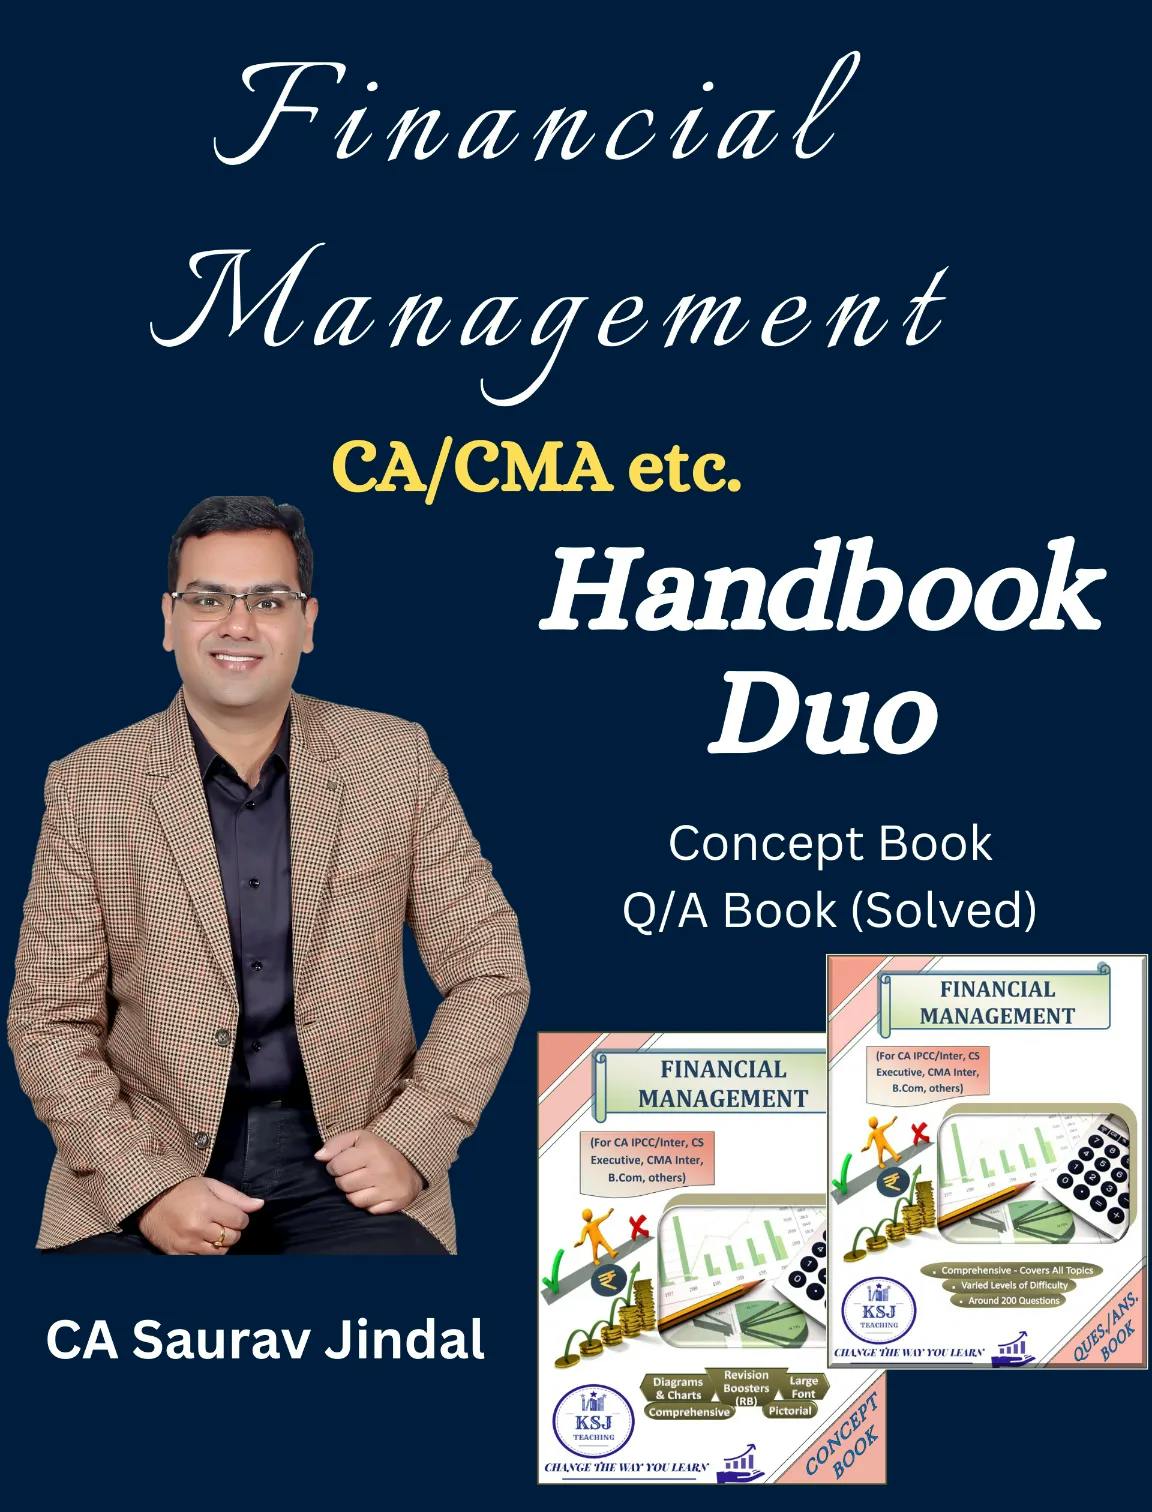 Financial Management Handbook Duo